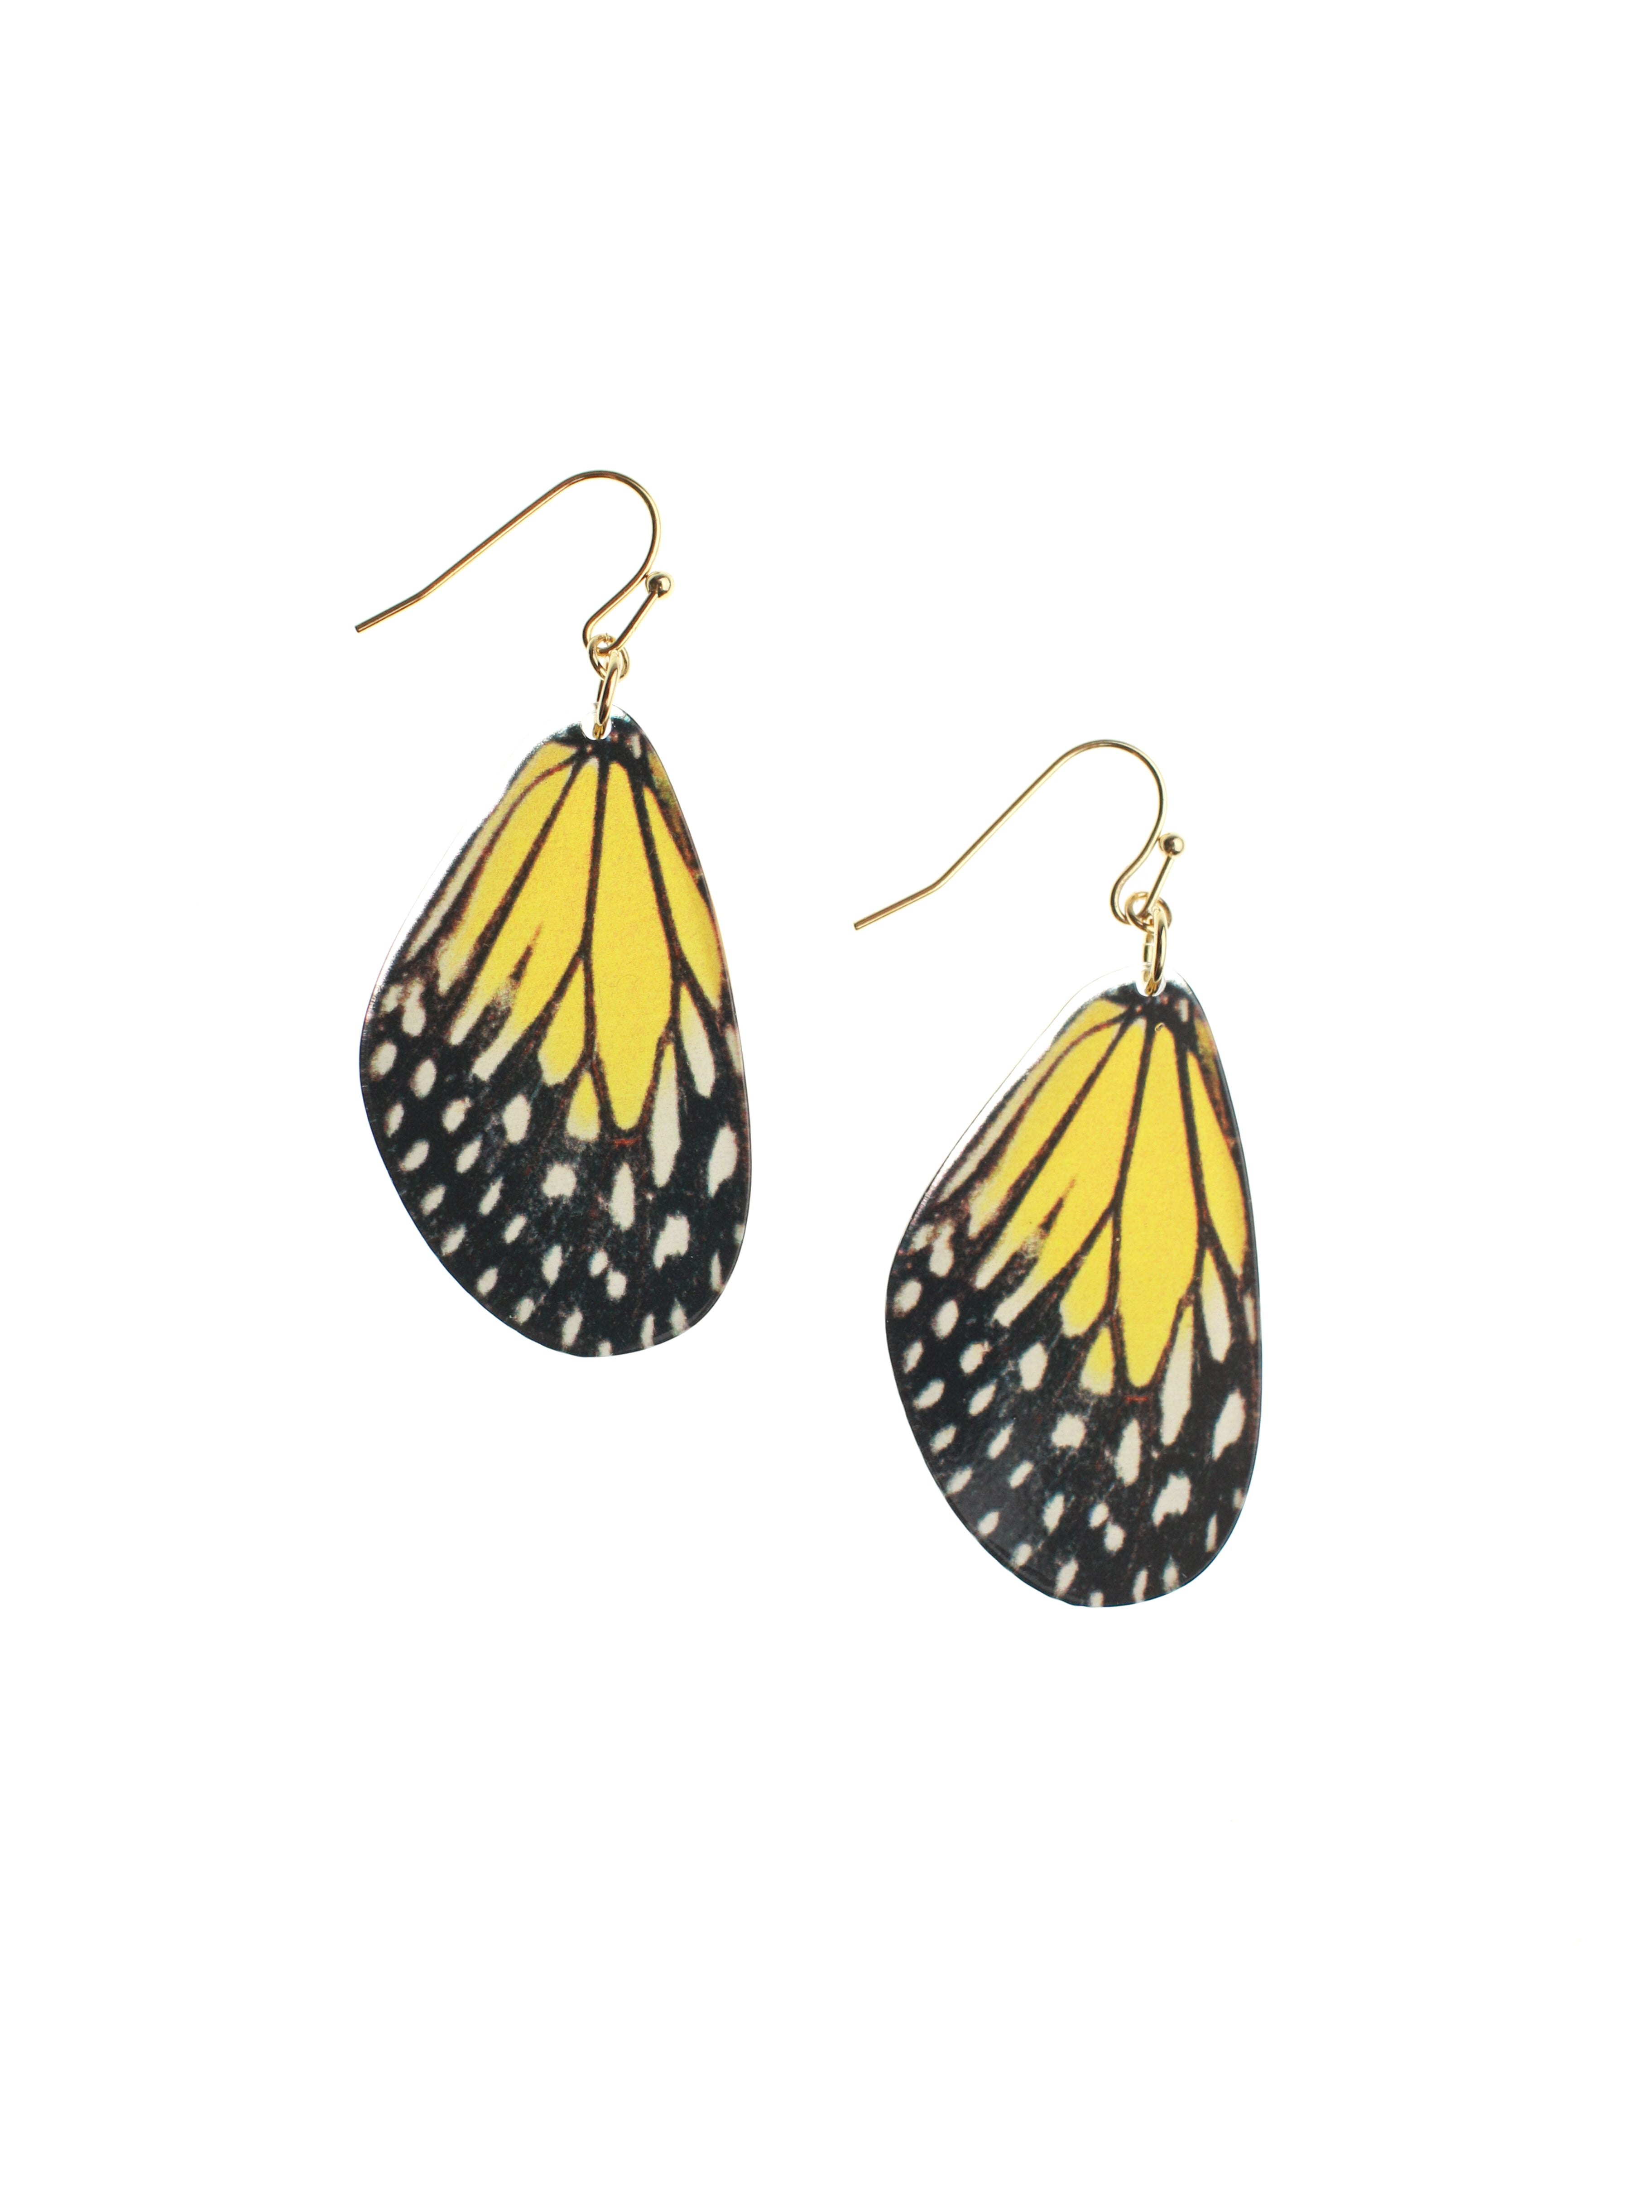 Butterfly Wing Earrings (Yellow) | Stitch & Stone